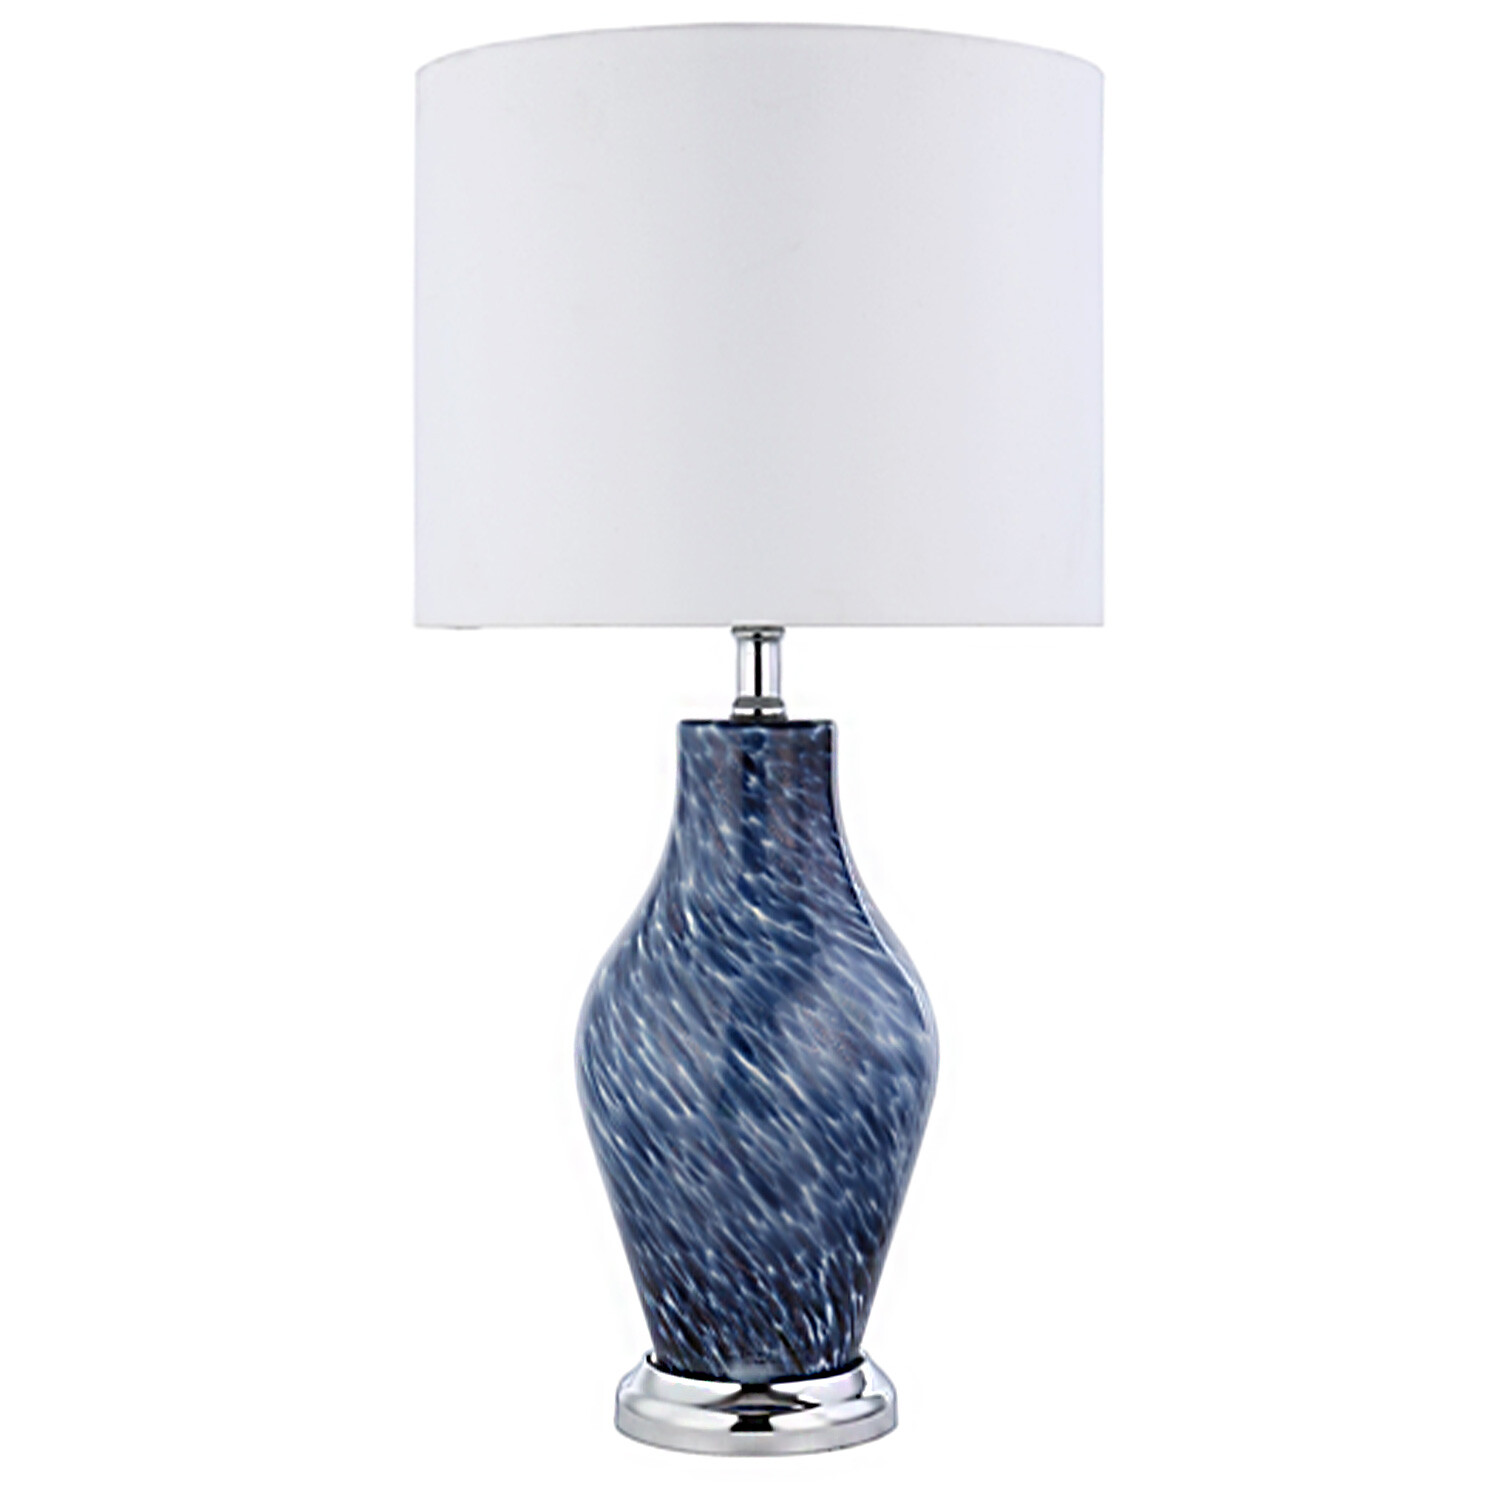 Adira Blue Table Lamp Image 1